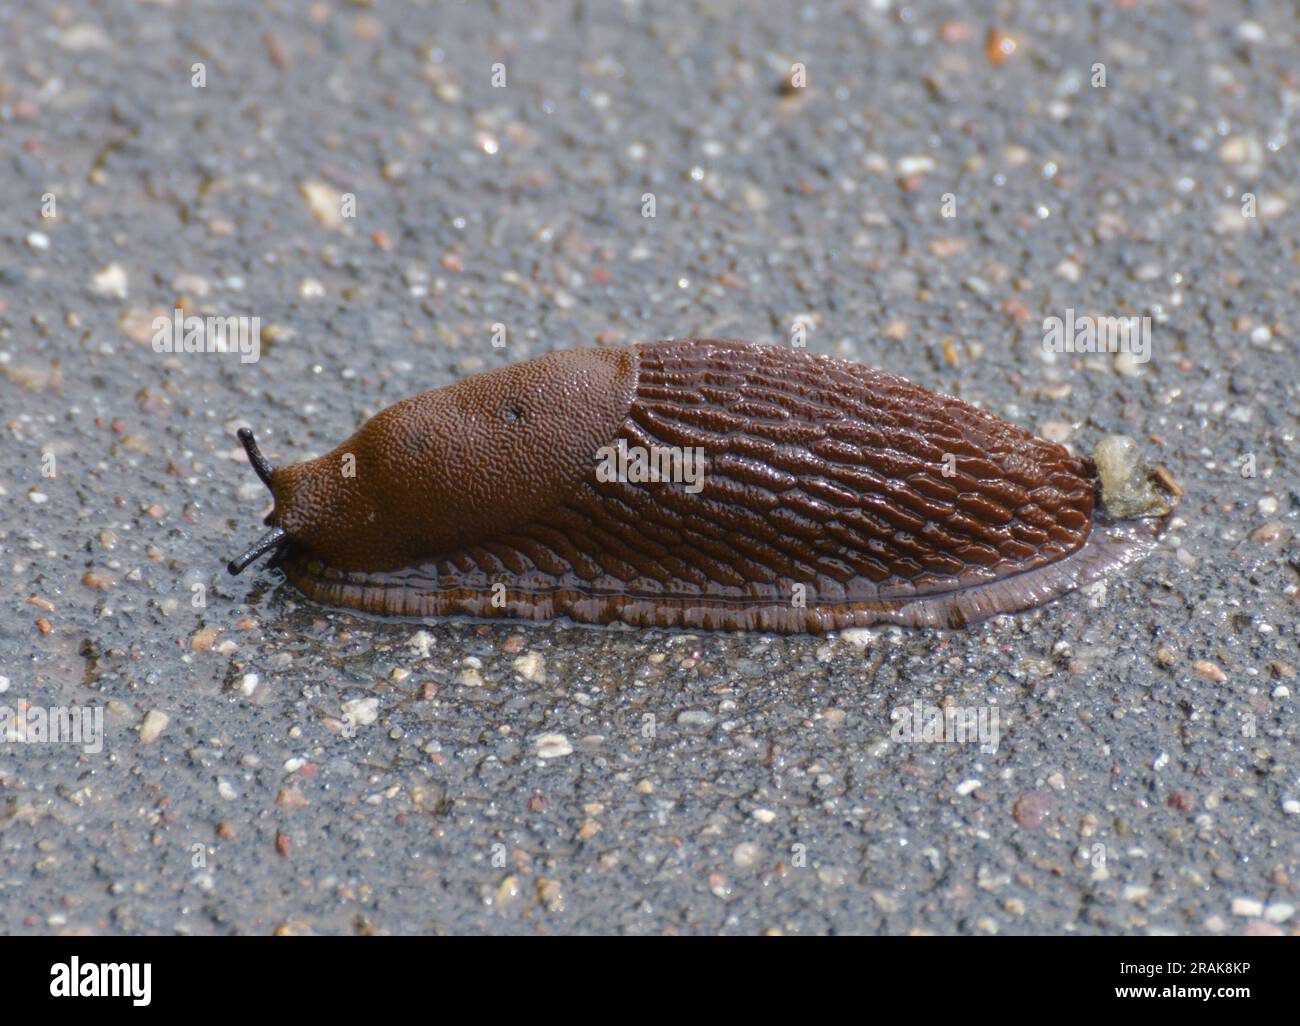 Arion vulgaris - slug crawling on asphalt Stock Photo